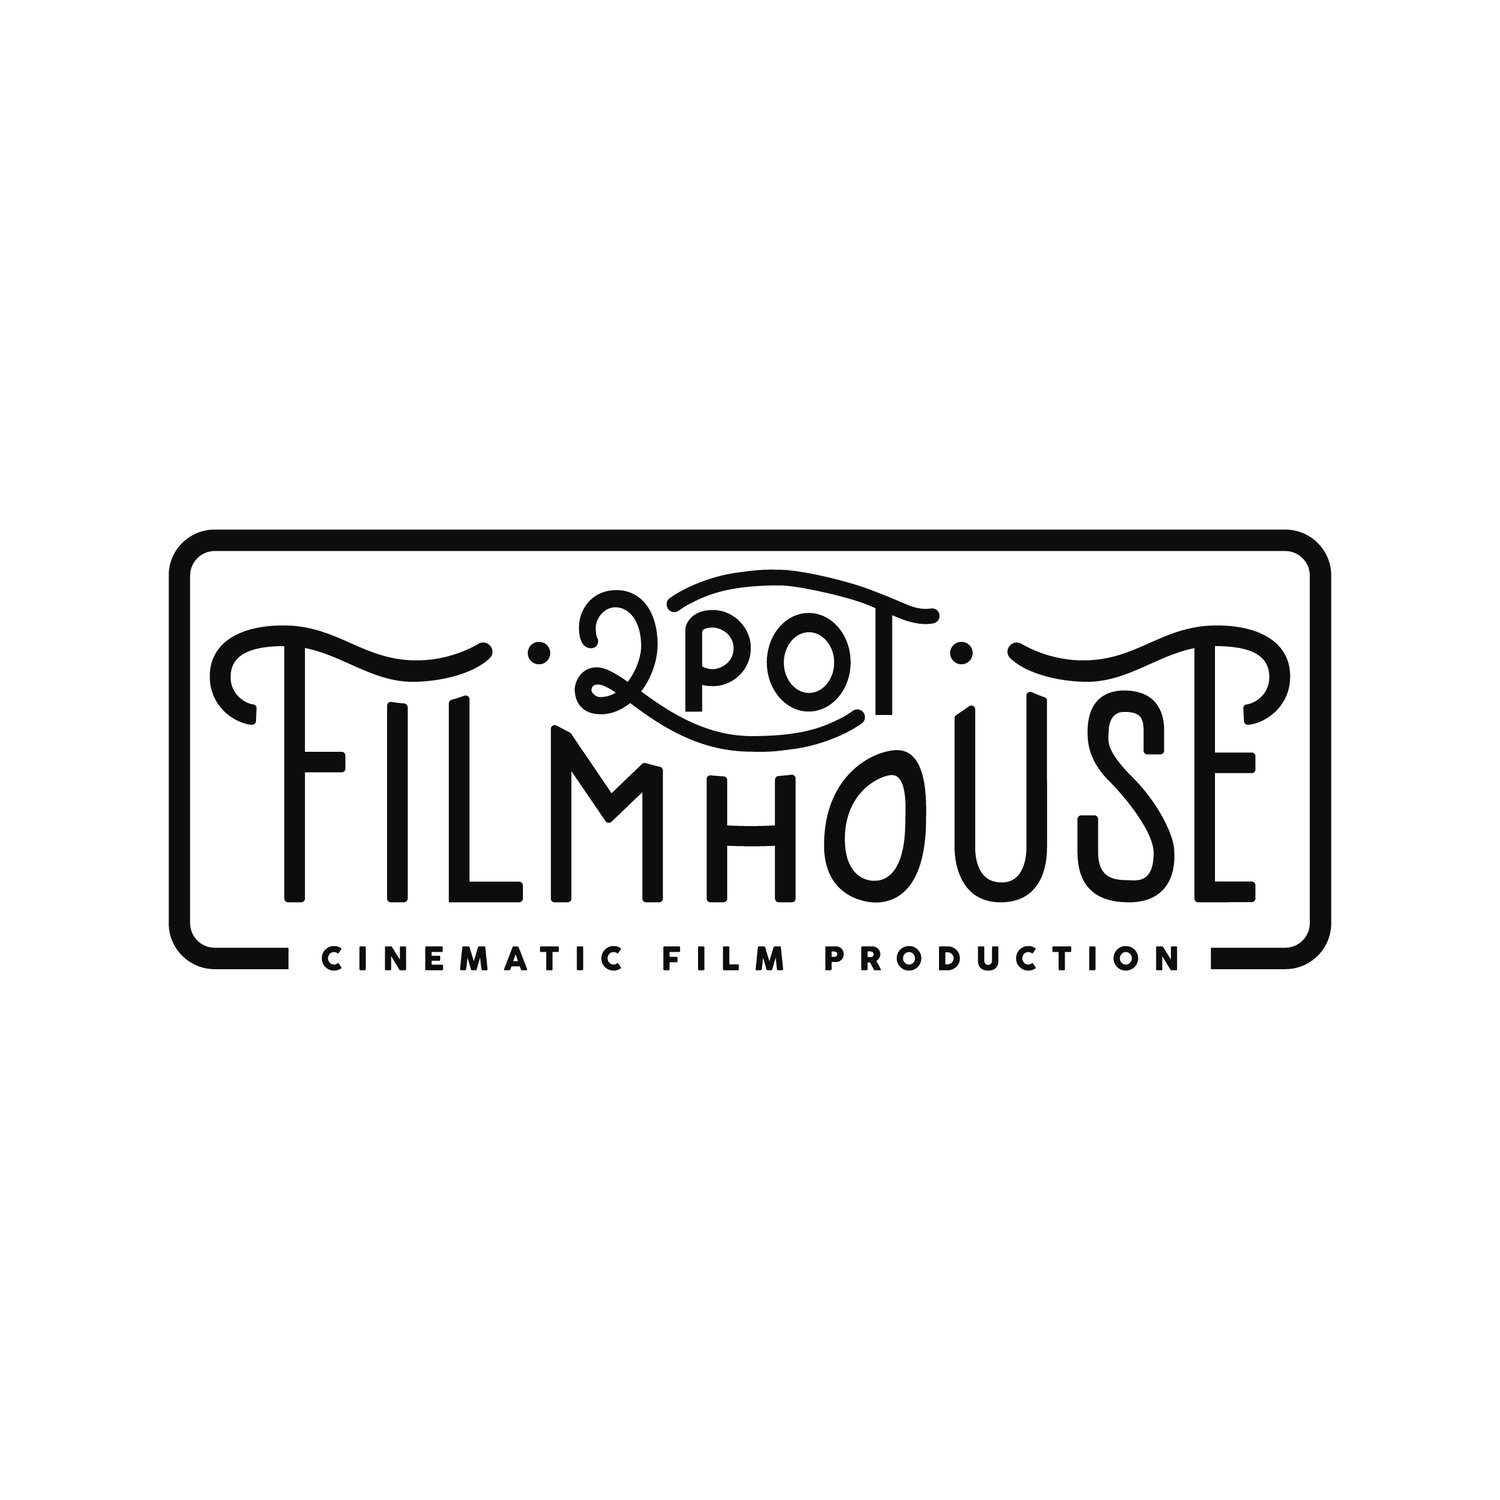 2Pot Film House 